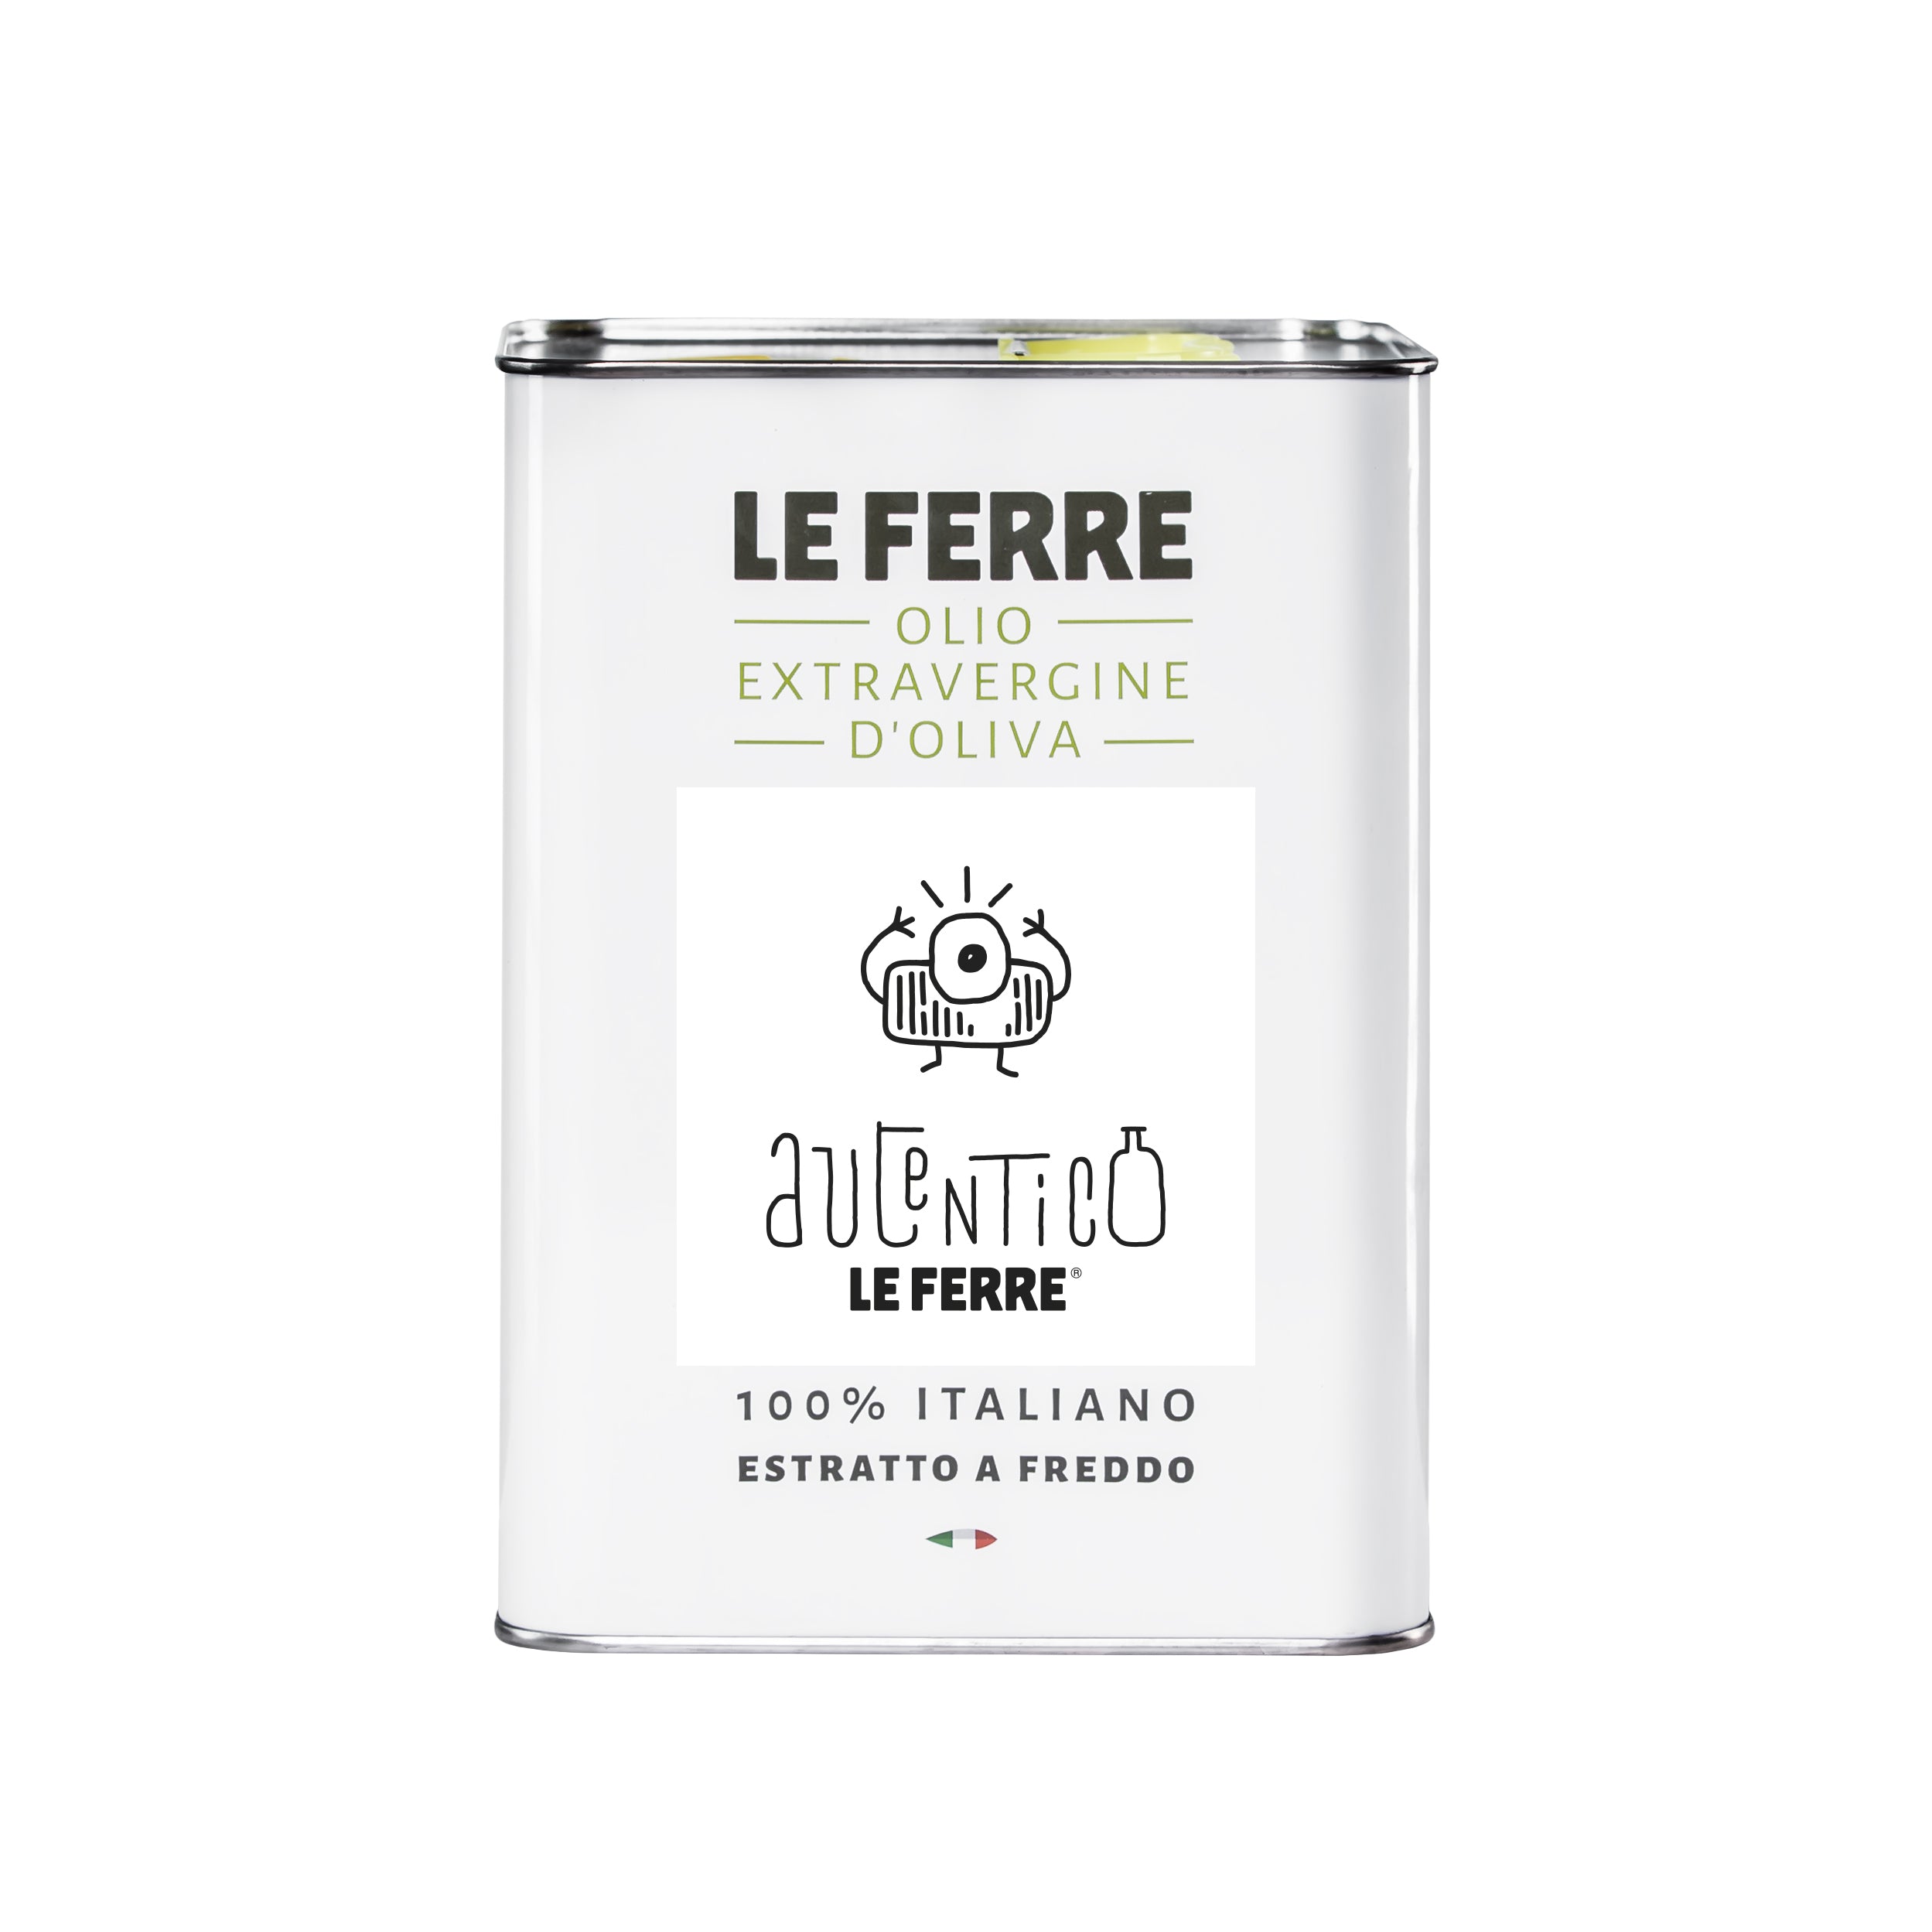 Le Ferre Italian Cold Extracted Autentico Extra Virgin Olive Oil 3 litres tin